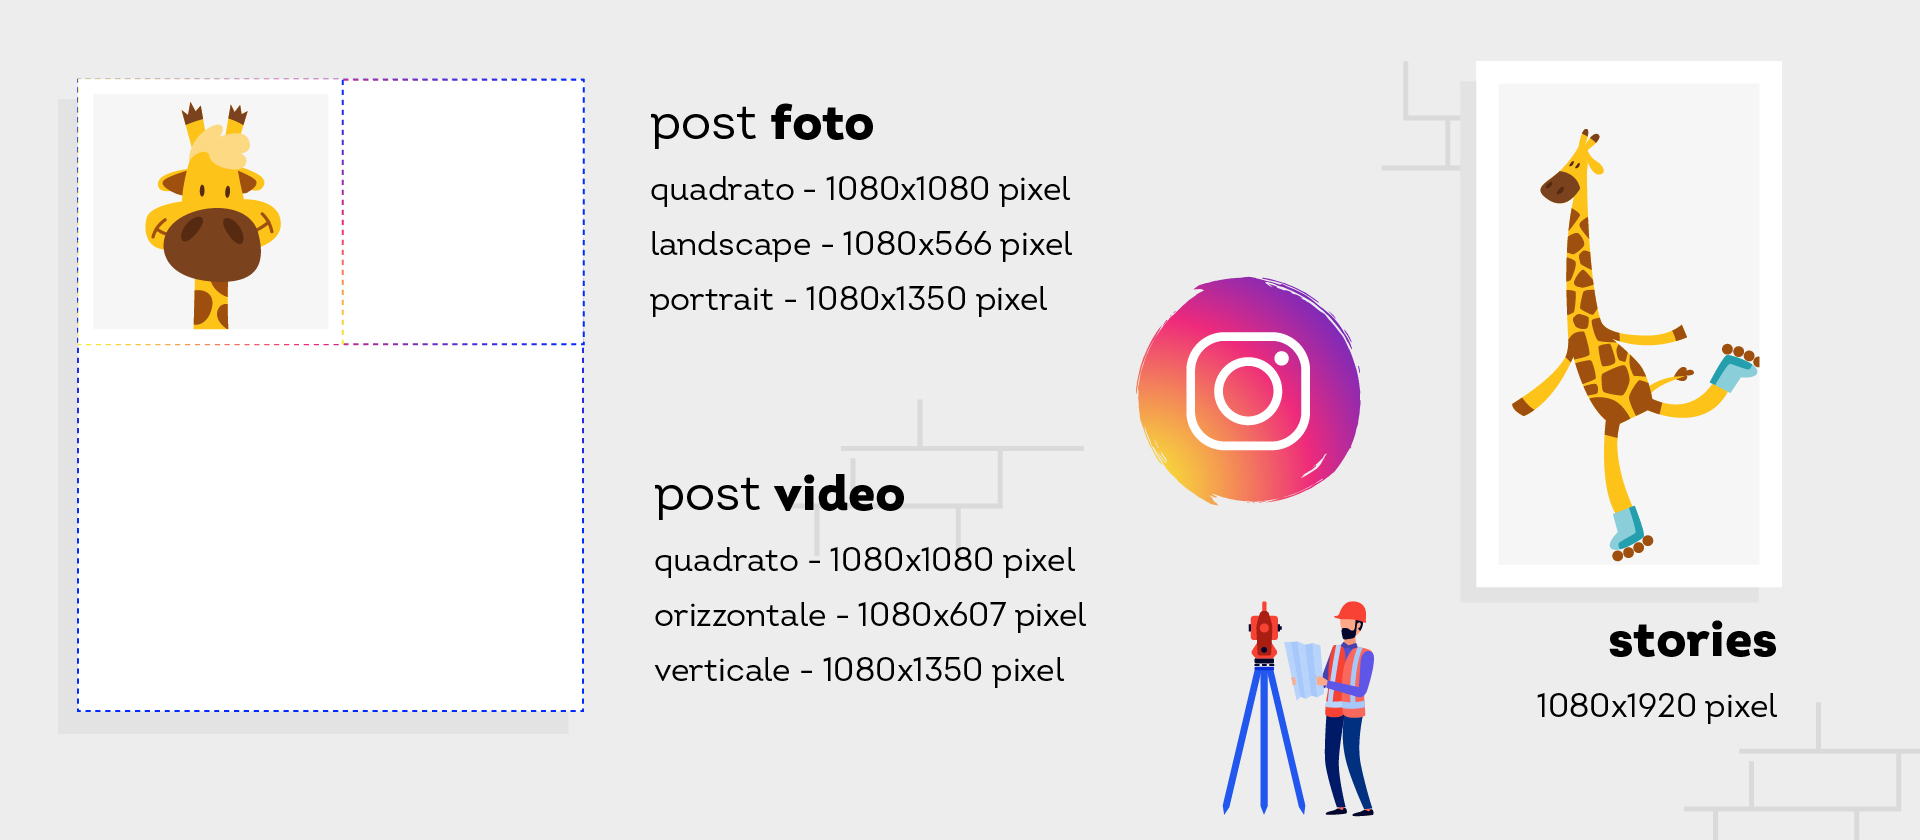 dimensioni foto video stories instagram 2020